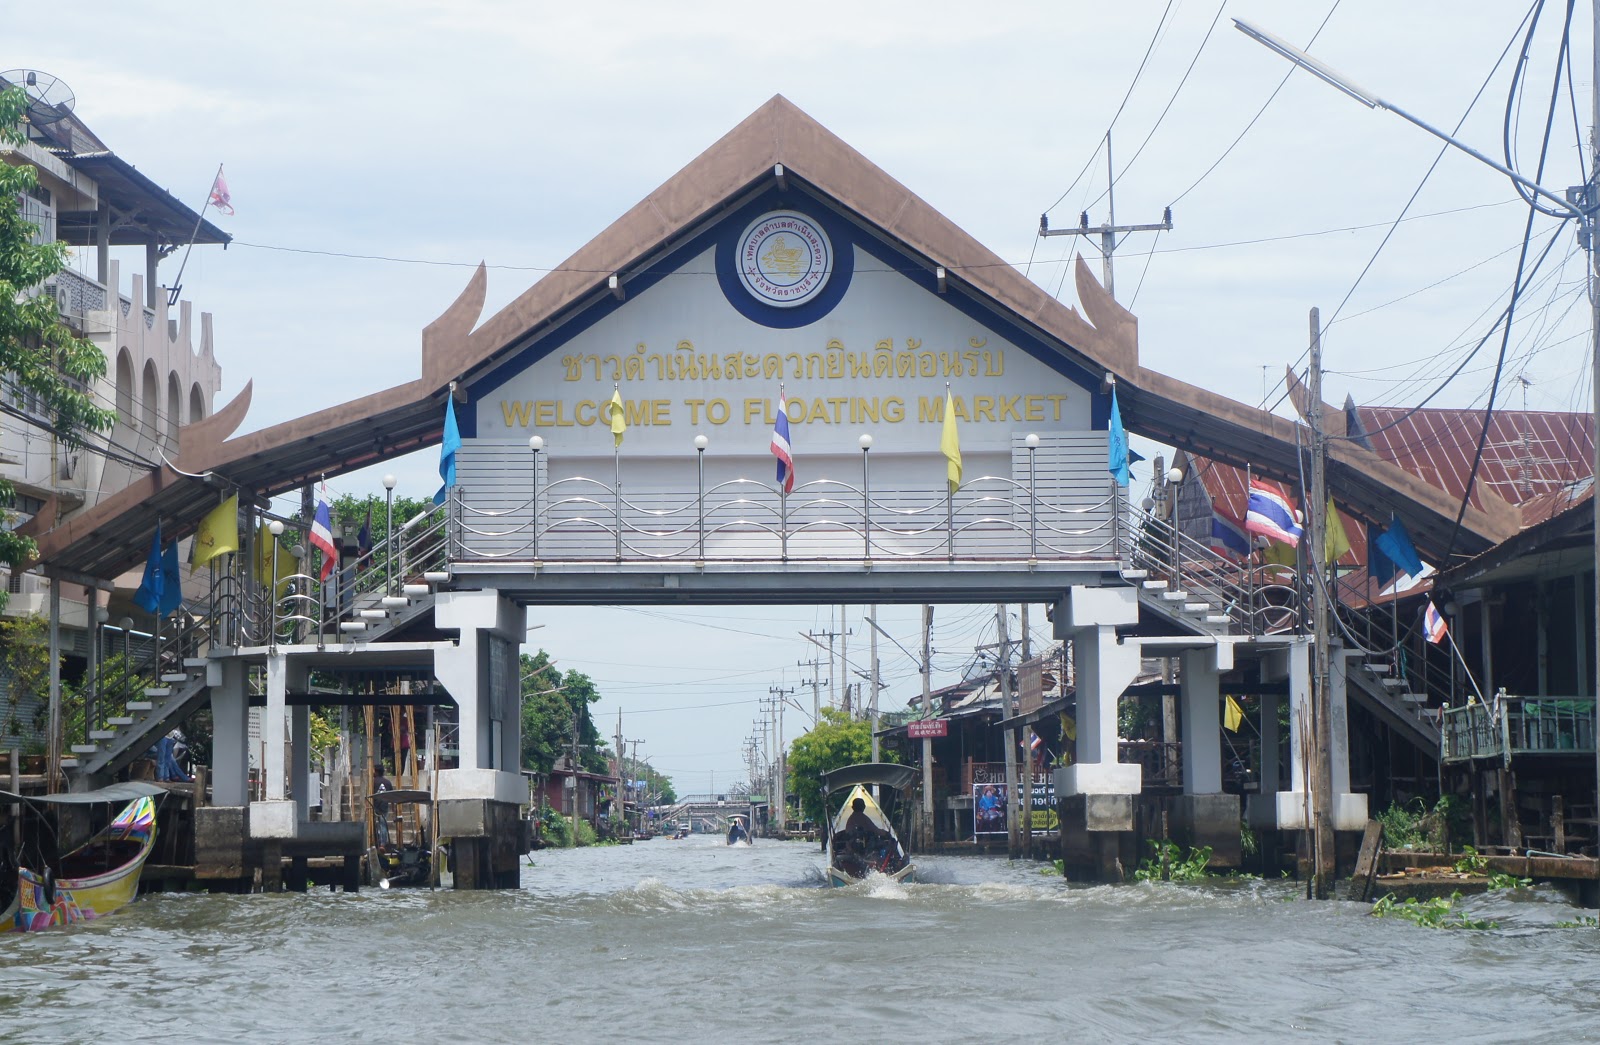 Damnoen Saduak Floating Market: Things To Do in Thailand